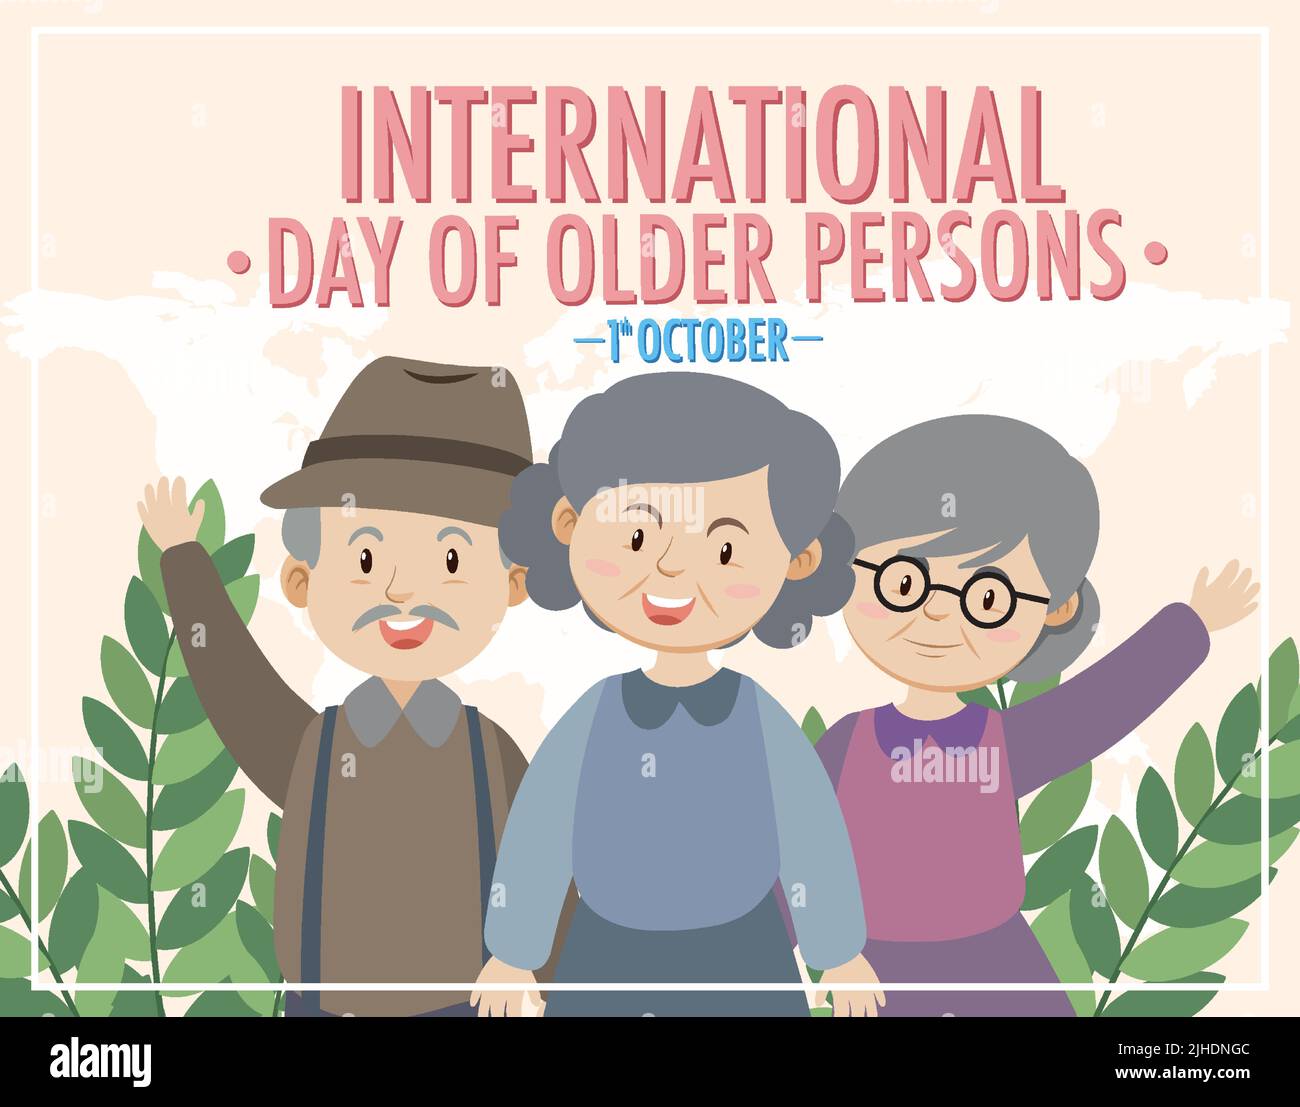 International day of older persons poster design illustration Stock